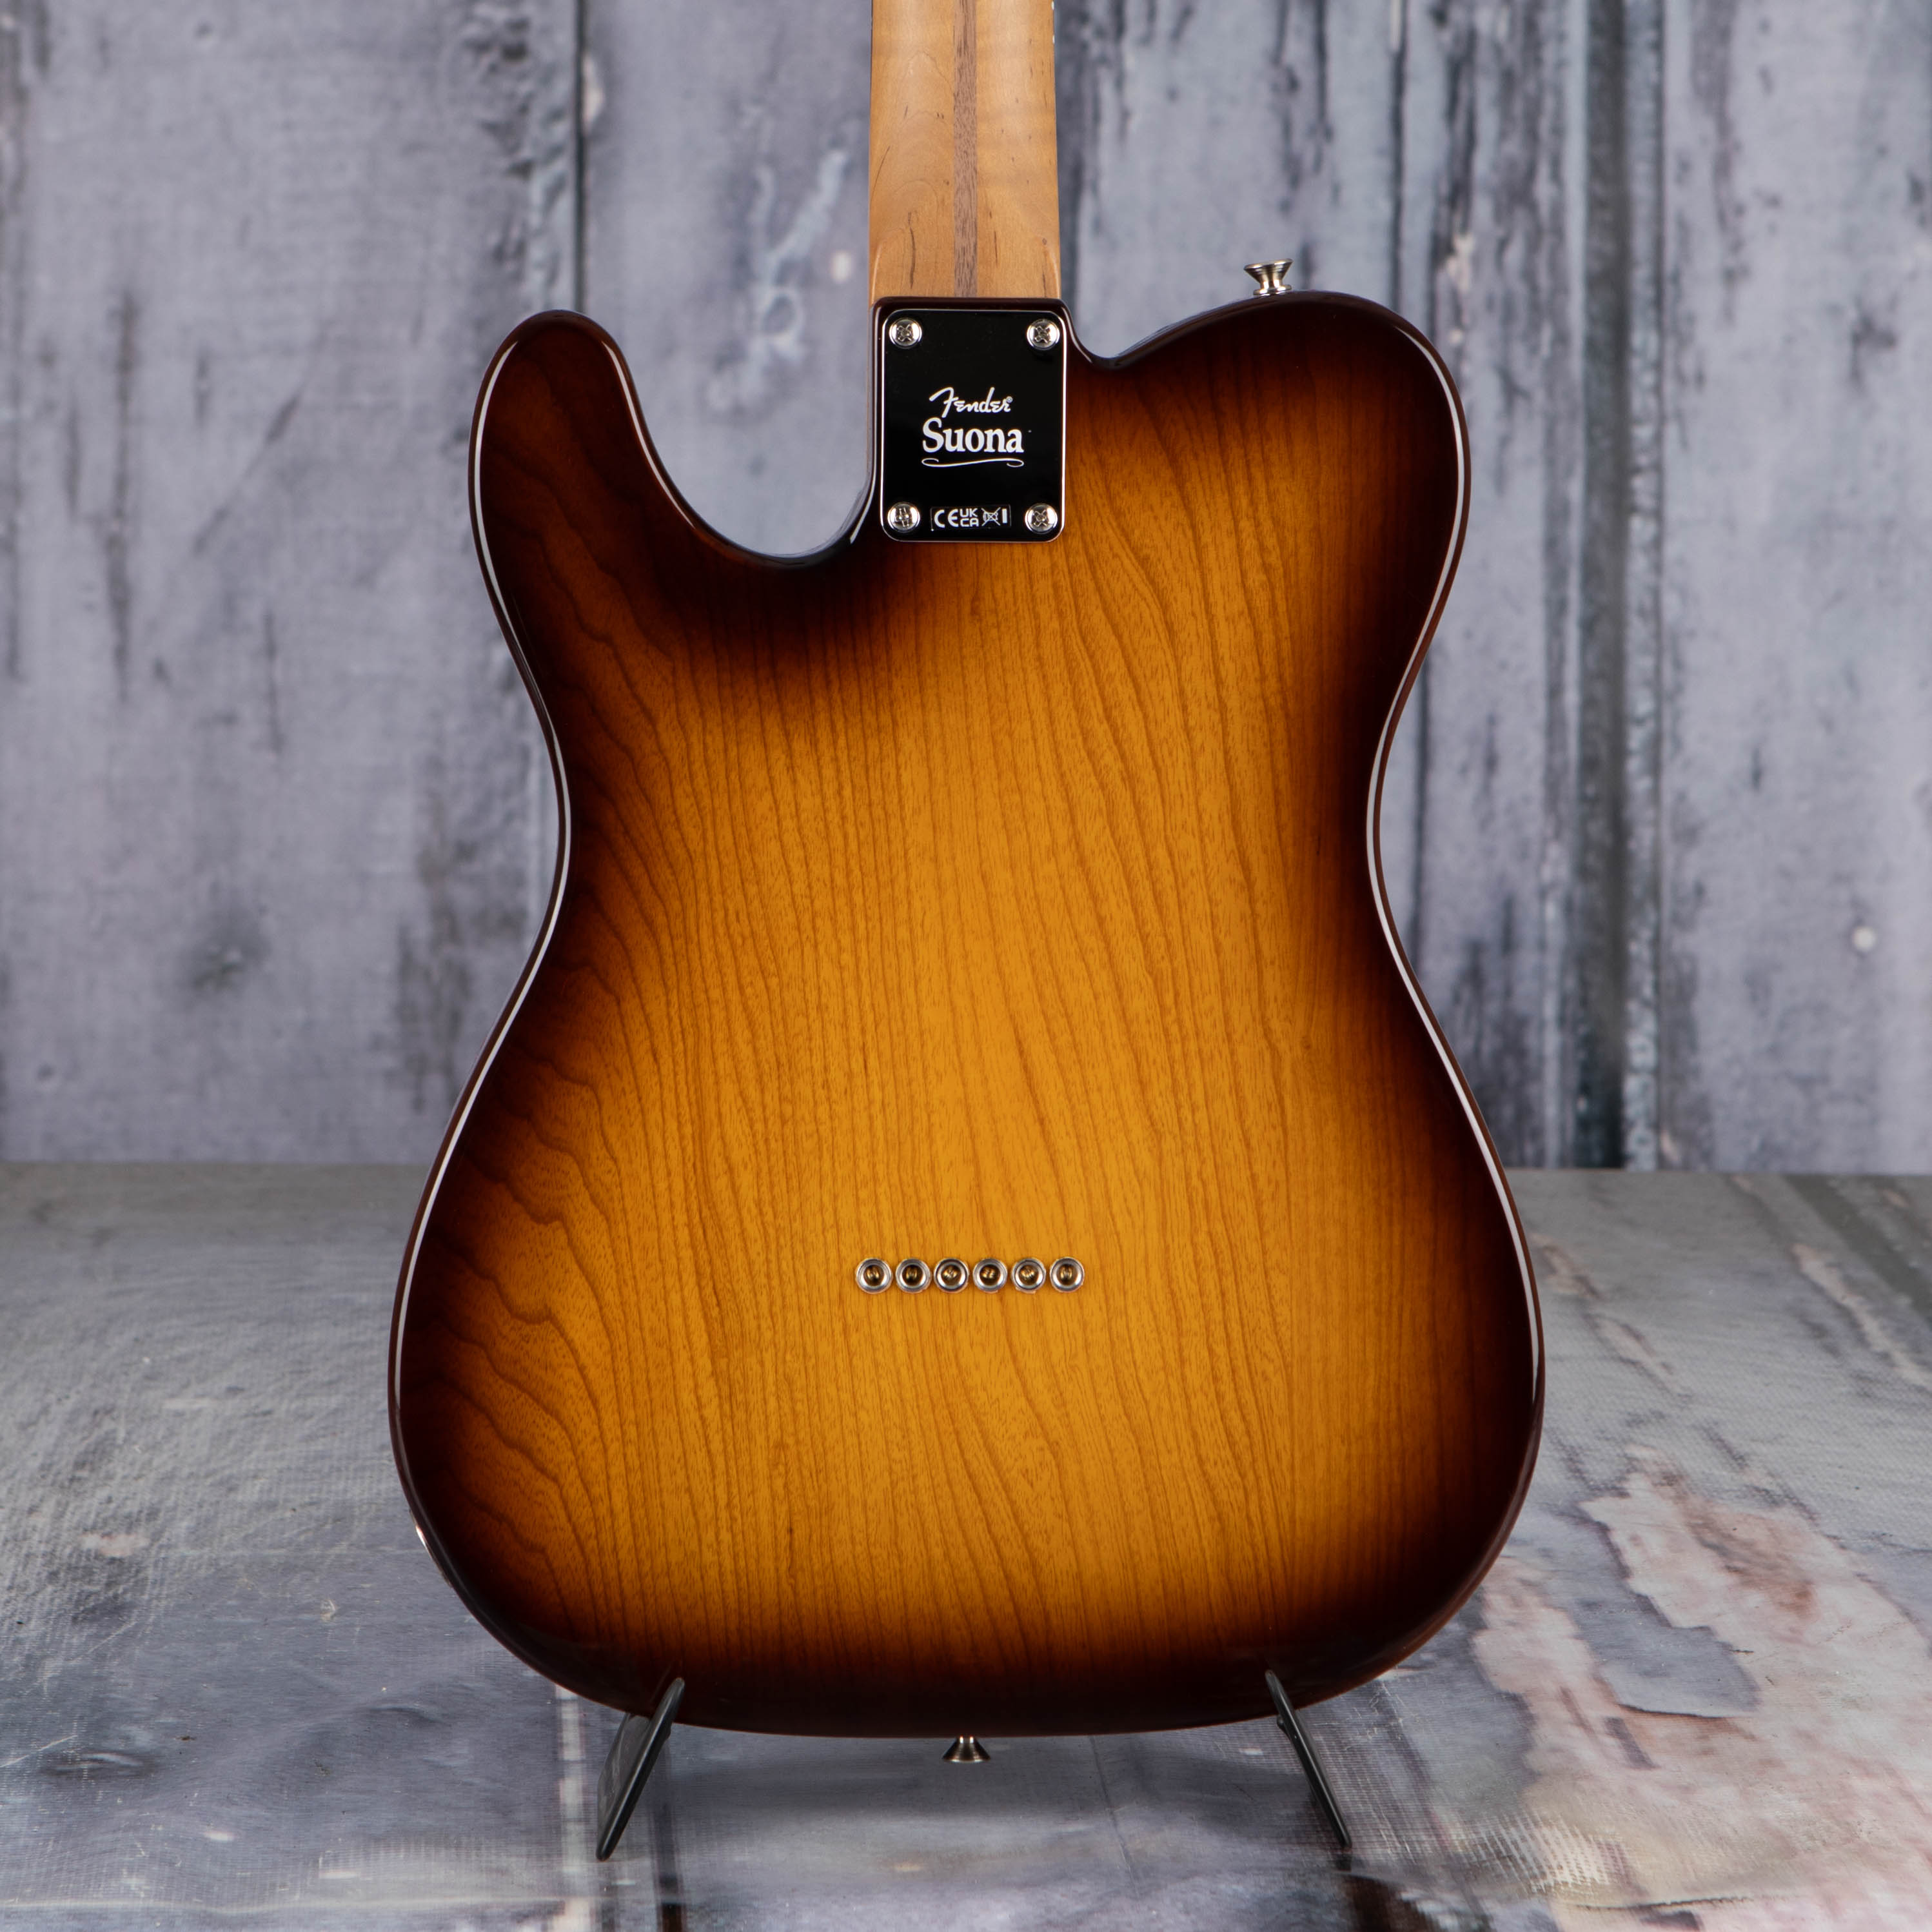 Fender Limited Edition Suona Telecaster Thinline Semi-Hollowbody Guitar, Violin Burst, back closeup